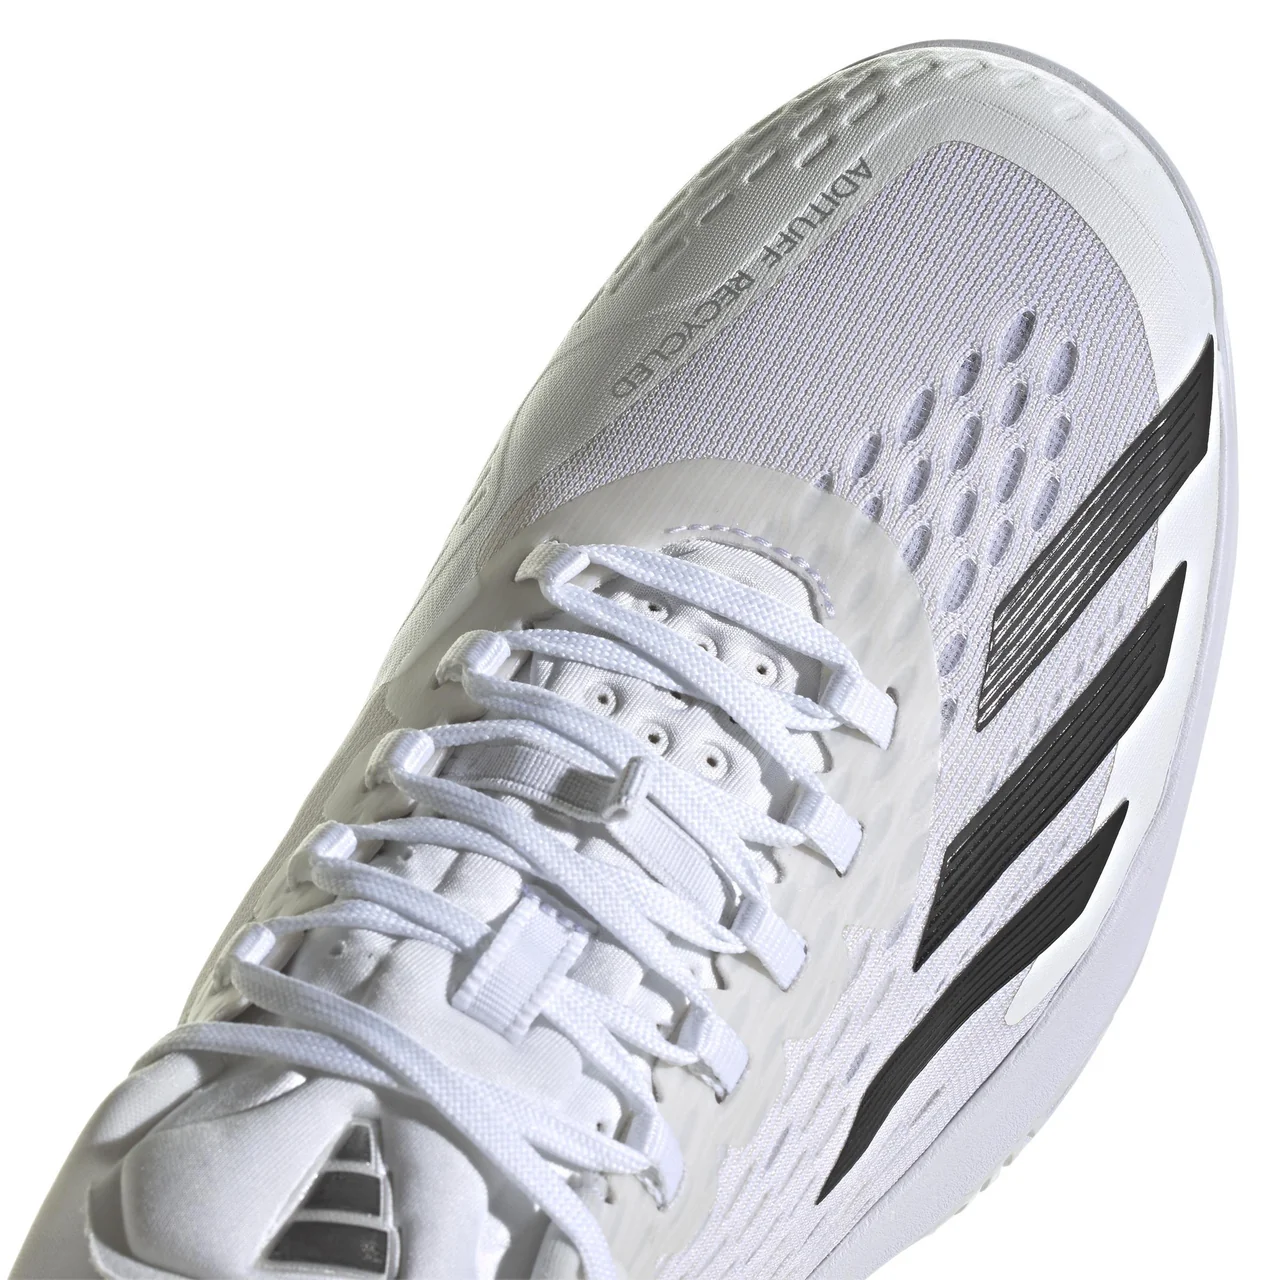 Adidas Adizero Cybersonic White